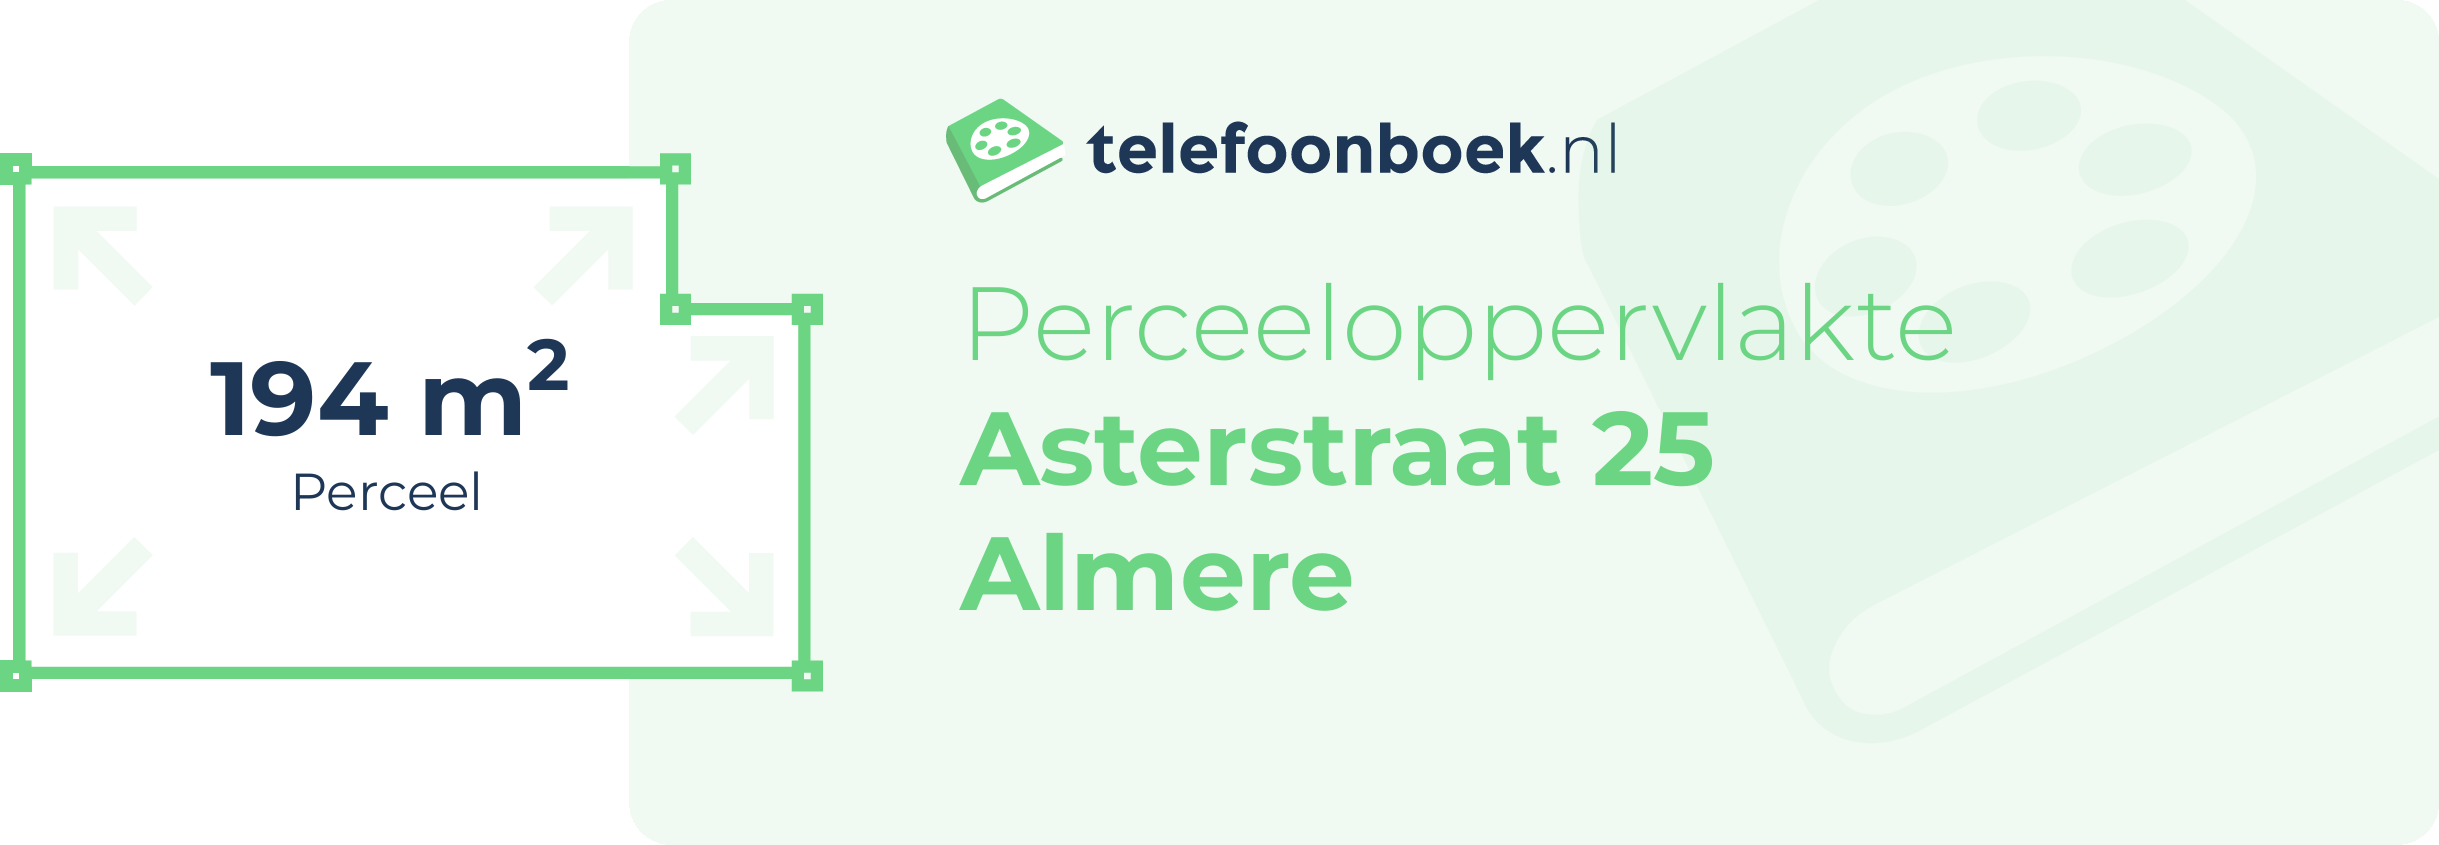 Perceeloppervlakte Asterstraat 25 Almere